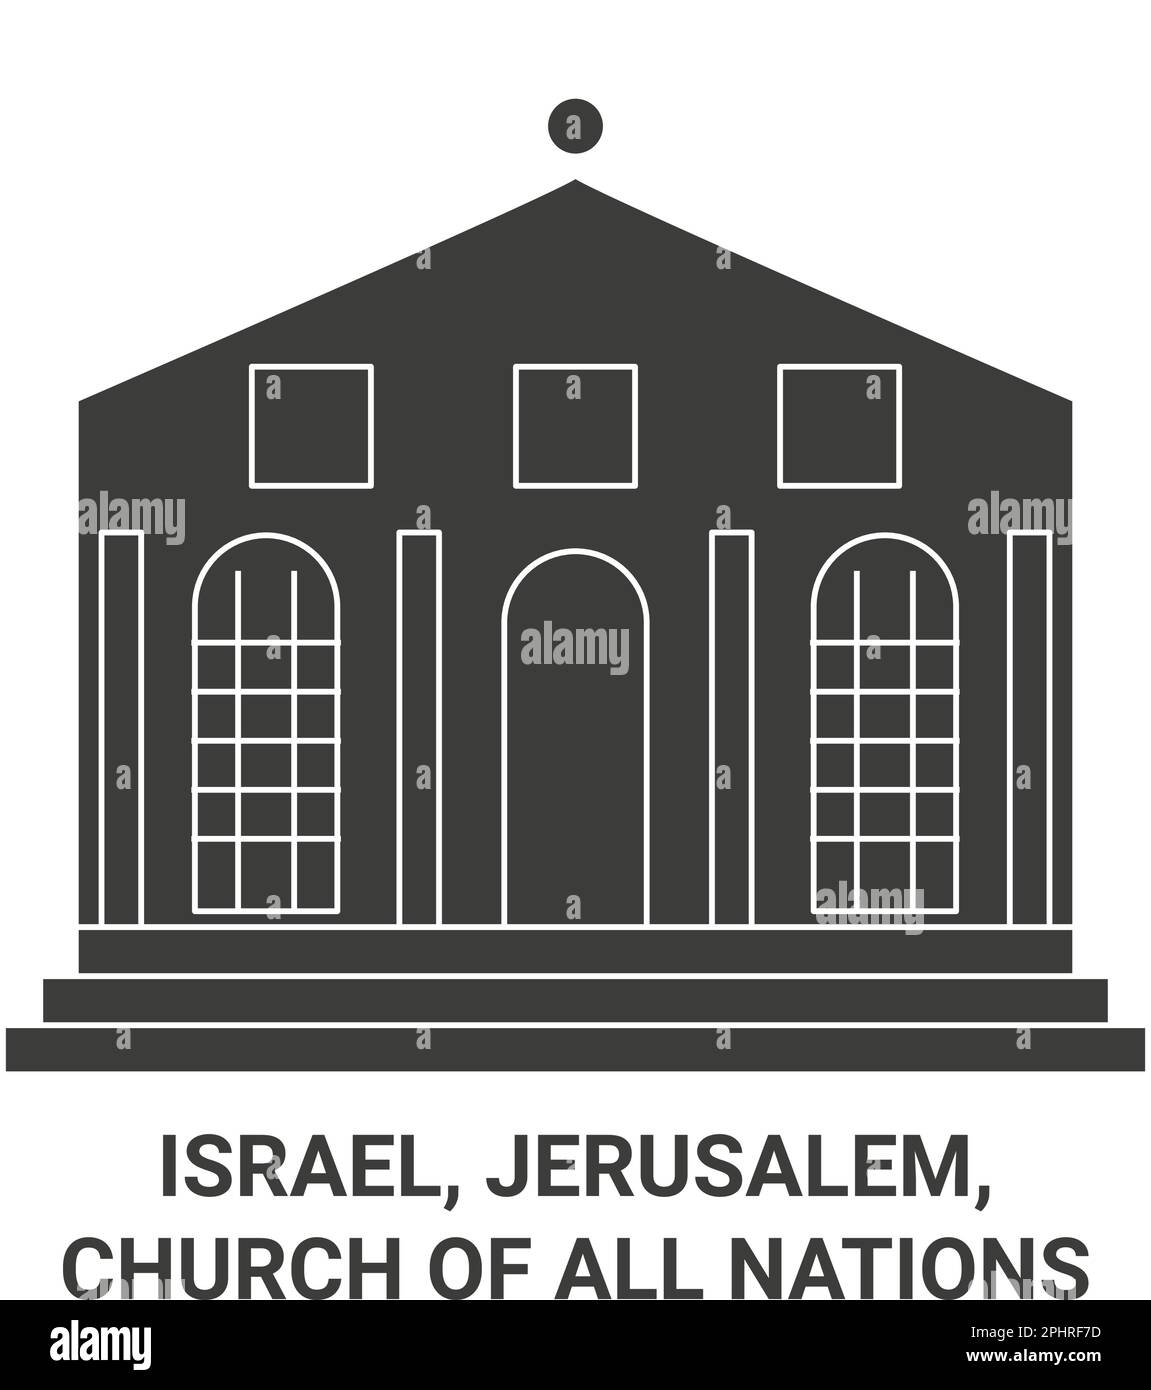 Israel, Jerusalem, die Kirche aller Nationen reisen als Vektorbild Stock Vektor